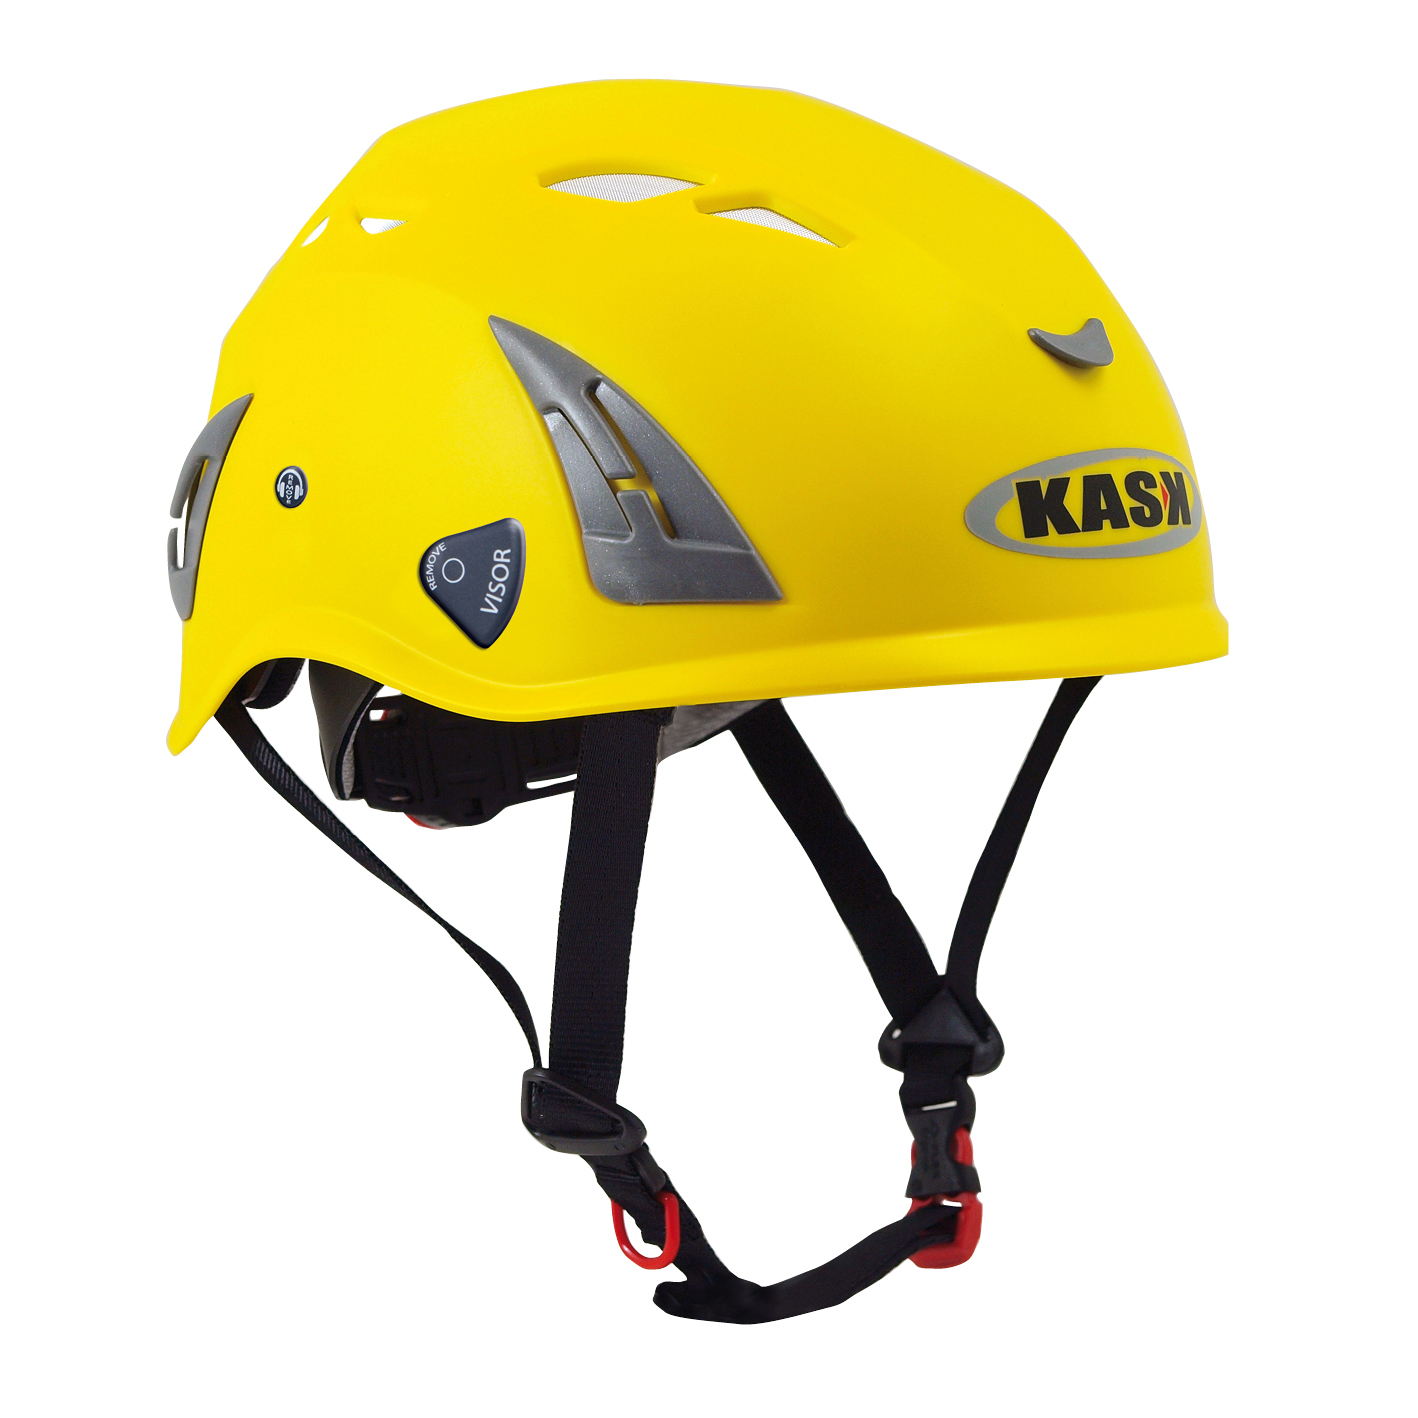 Kask Schutzhelm Plasma AQ, Rigger Helm, Gelb, nach EN397 Norm mit Kinnriemen & Knebelverschluss